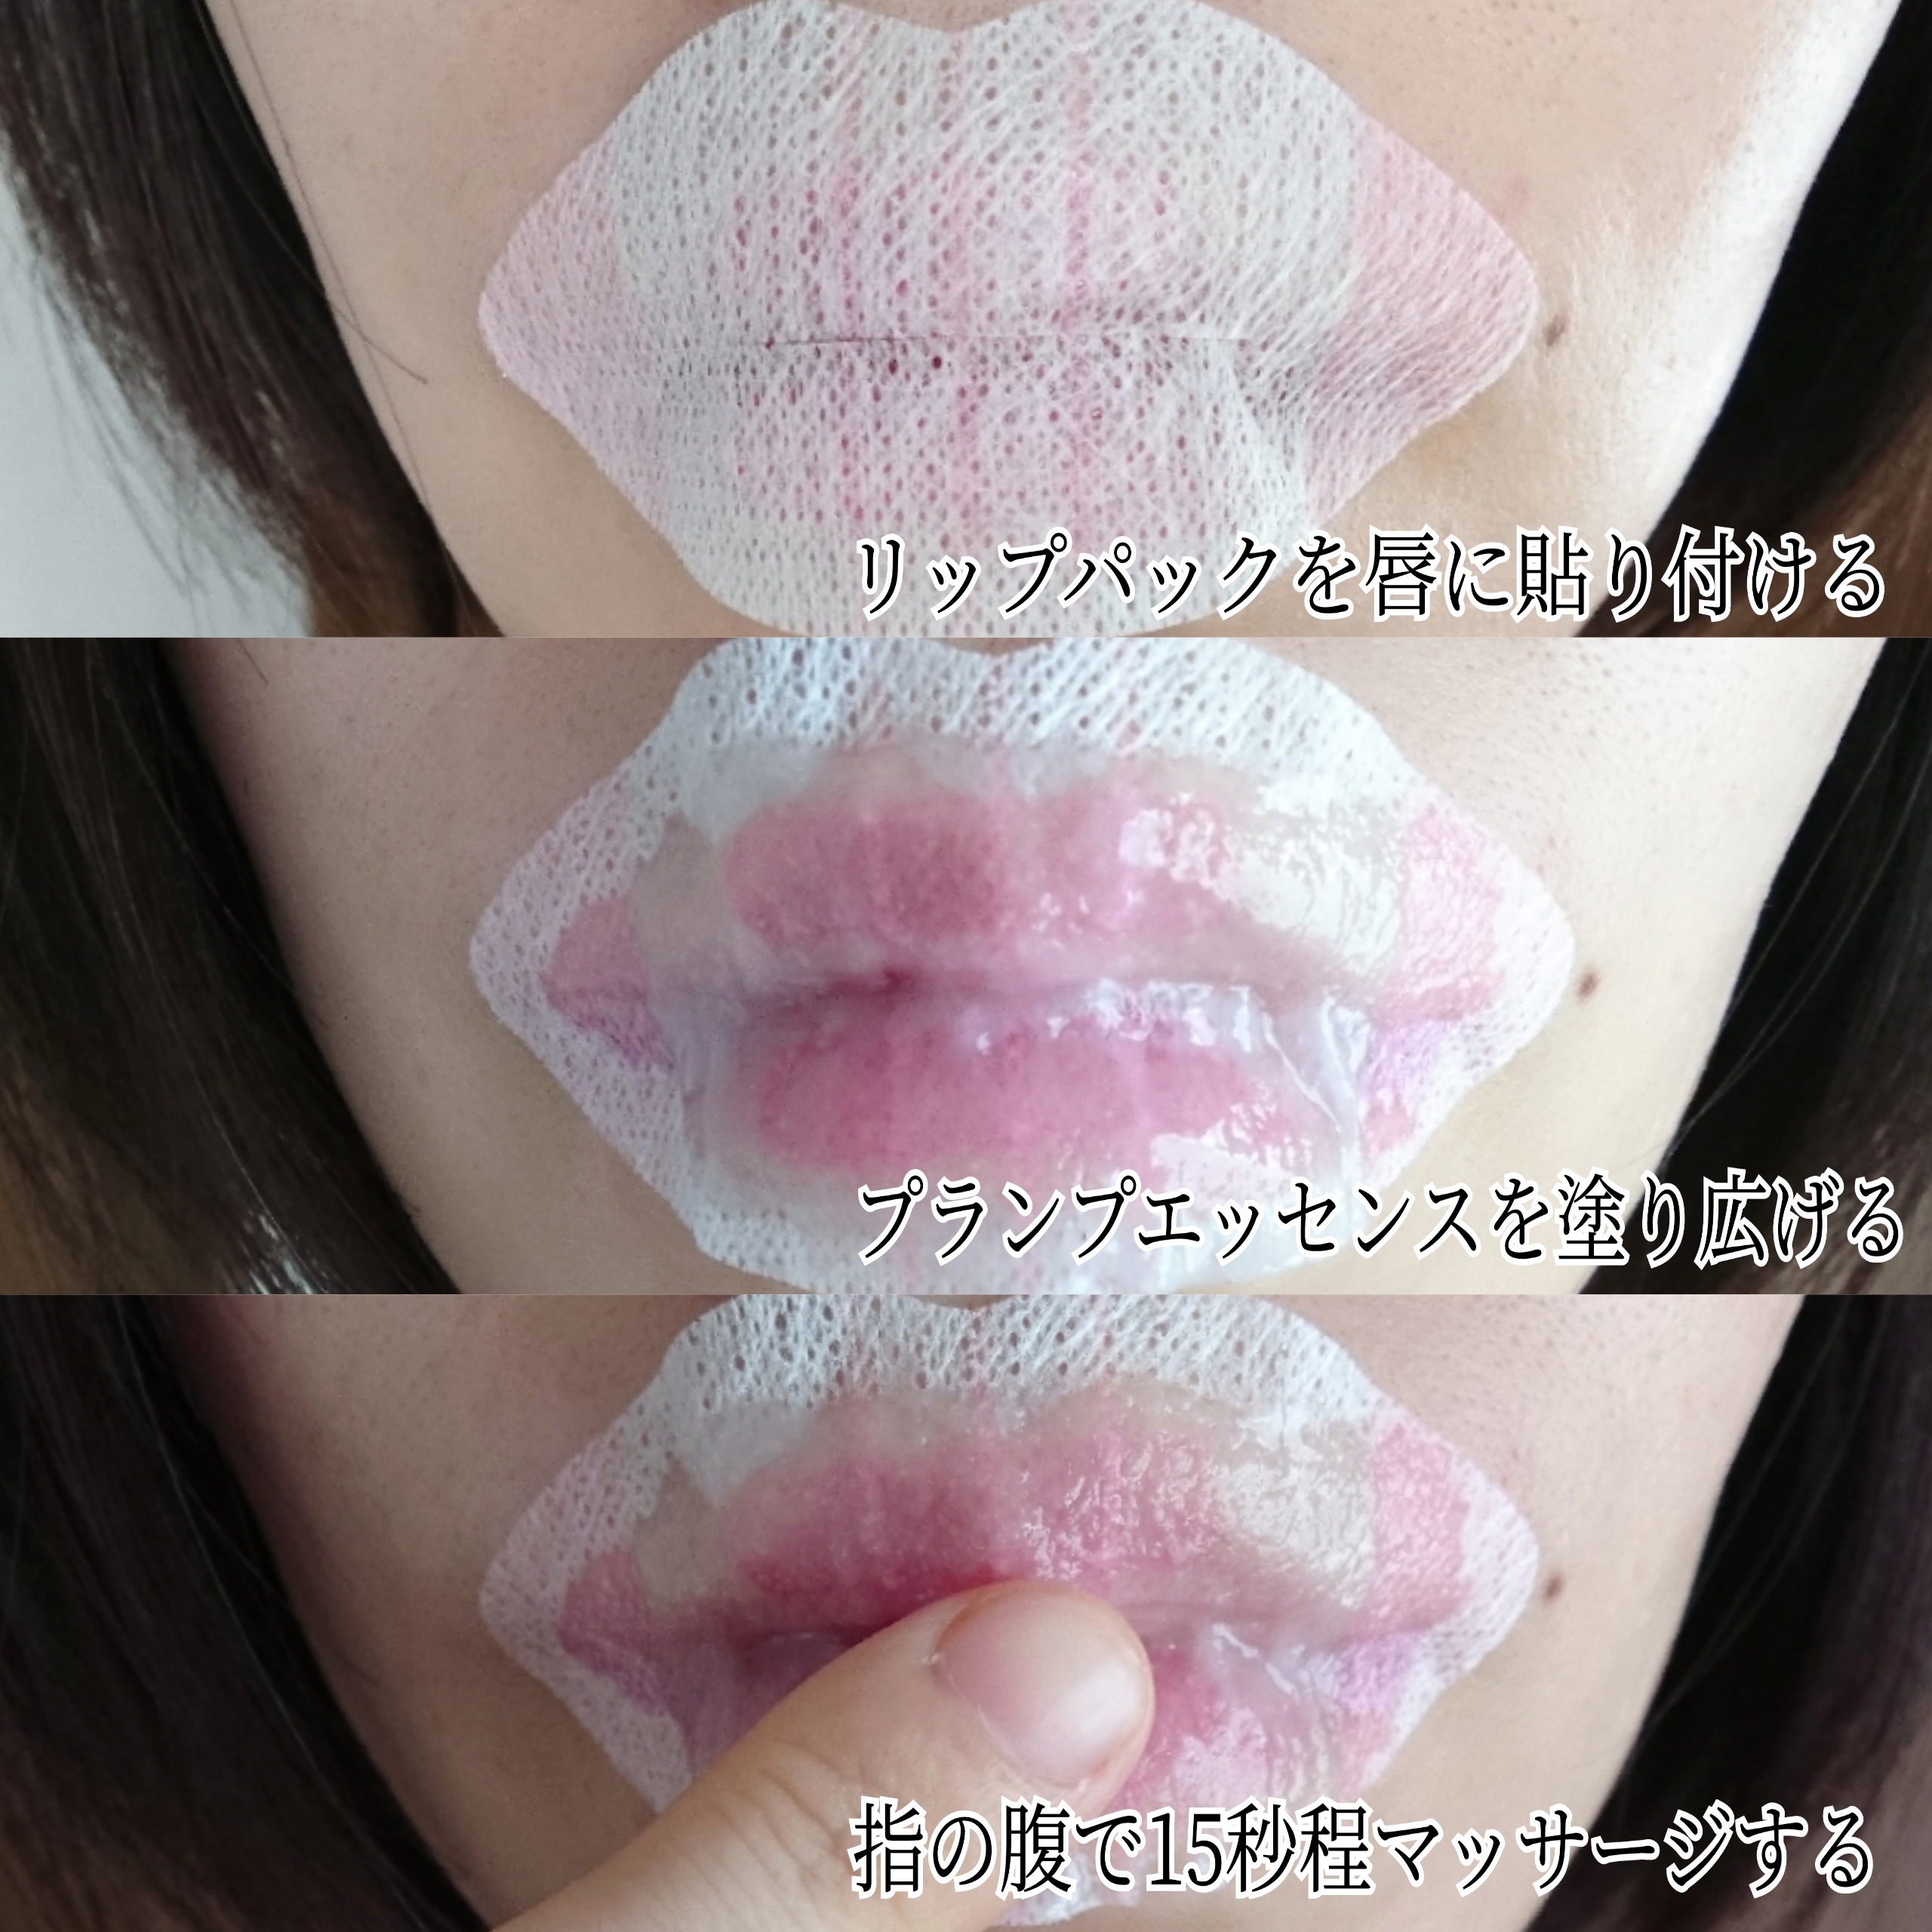 MOTTO LAB. LIPS SHOT(唇専用ニードルパック)を使ったYuKaRi♡さんのクチコミ画像6